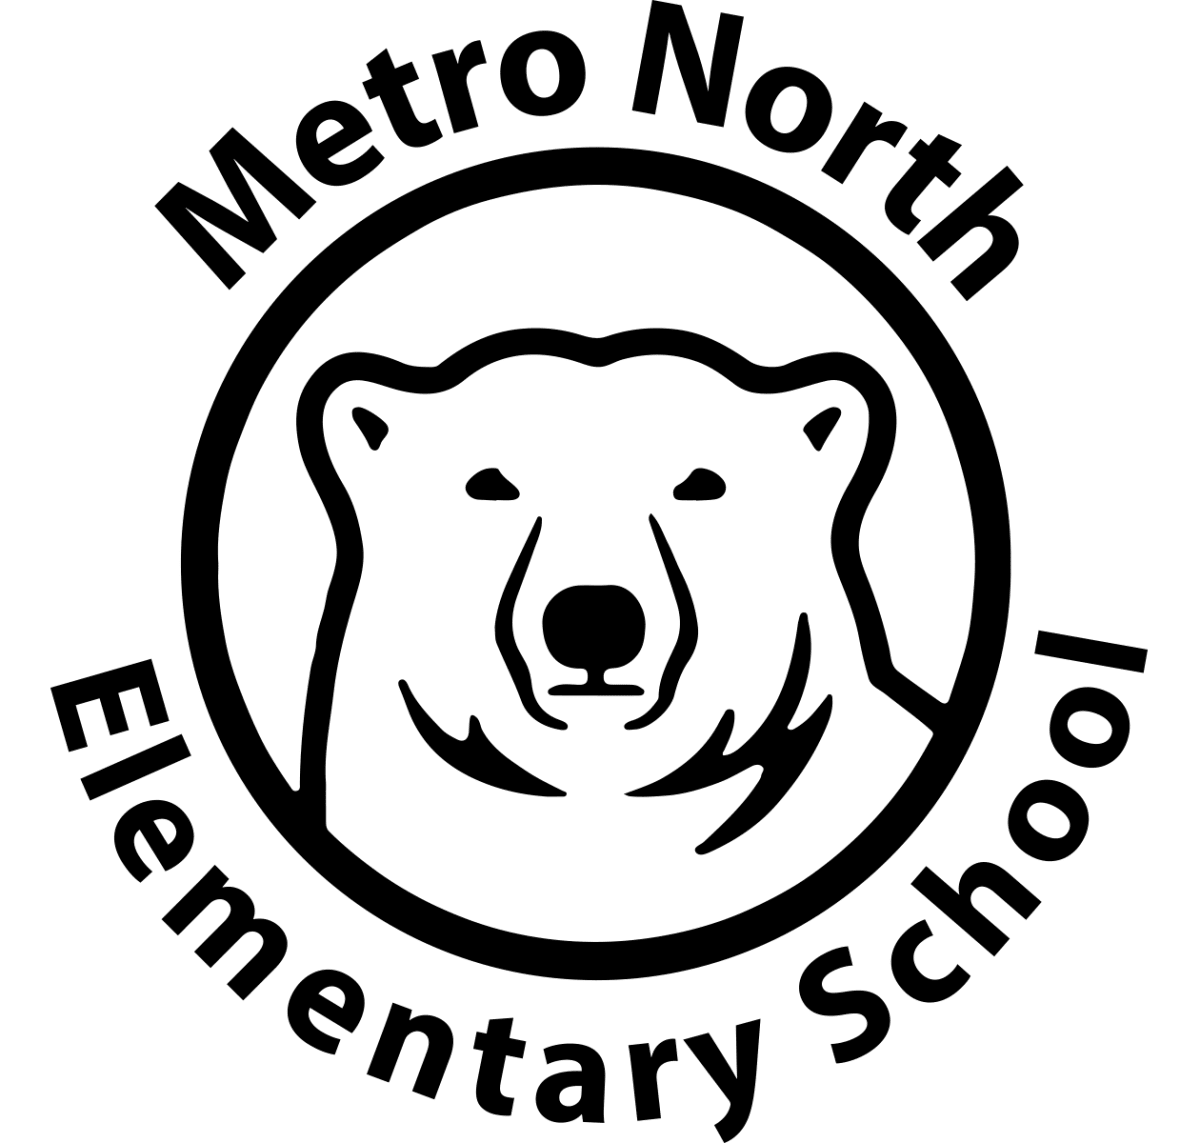 Metro North Thanksgiving Schedule 2022 Metro North Elementary School: Home